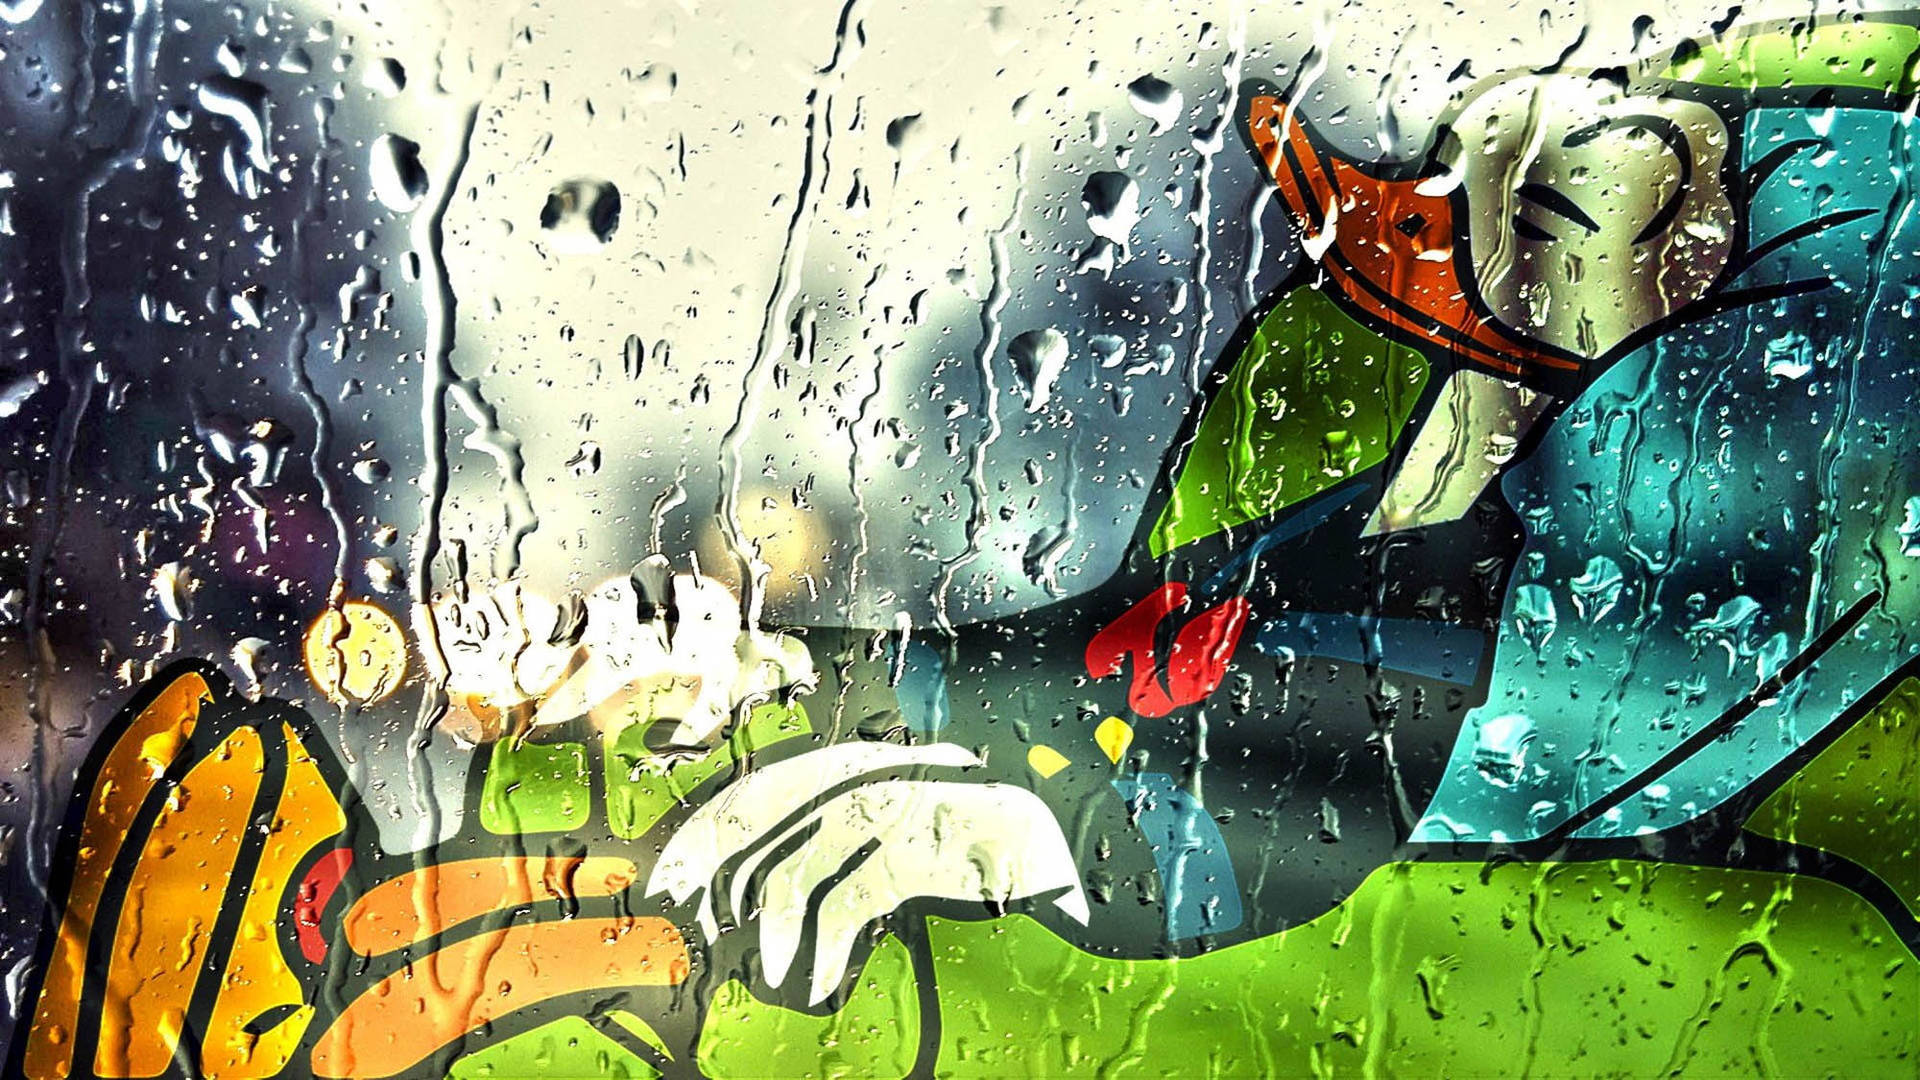 Donald Duck Regndråbe Illustrationer Tapet: Tapet med illustrationer af Donald Duck ved middagstid med regndråber. Wallpaper